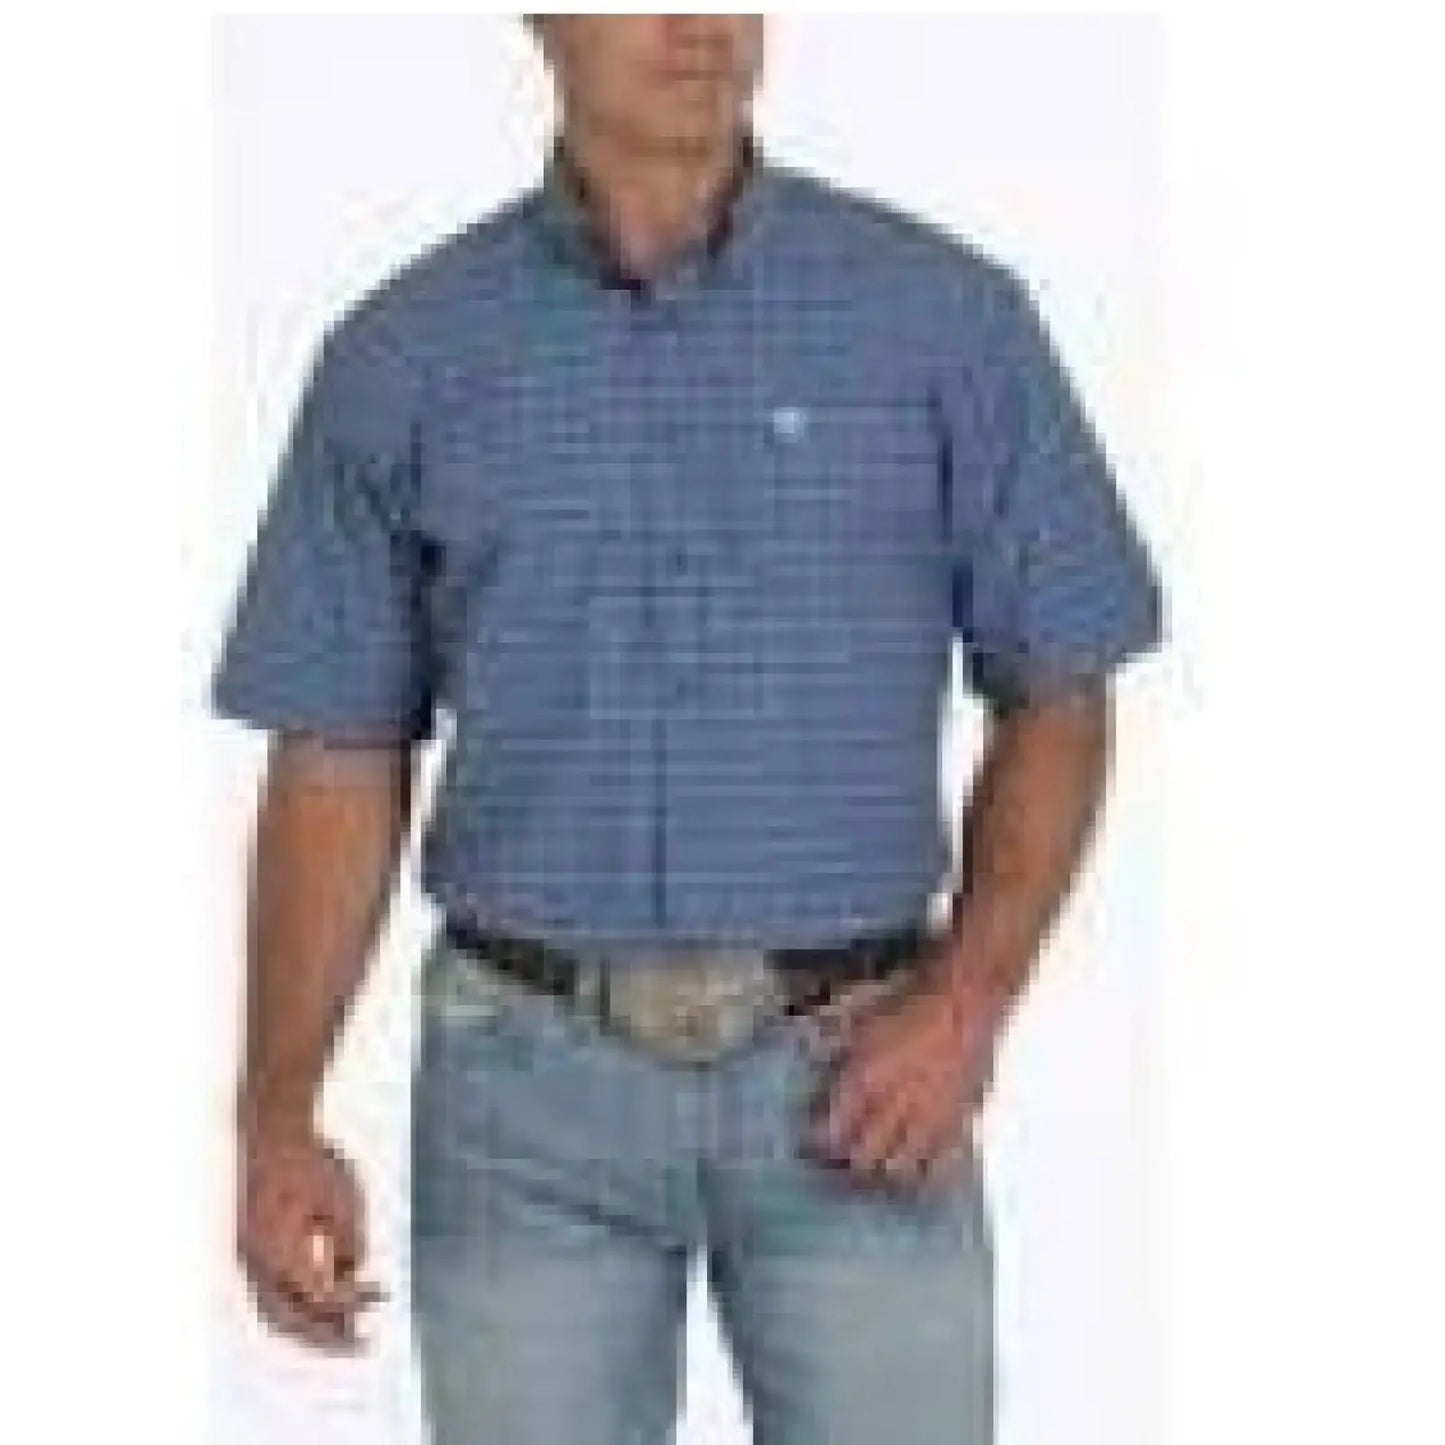 Cinch Men’s Shirt Casual Short Sleeve Button Down Collar MTW1111377 - Cinch